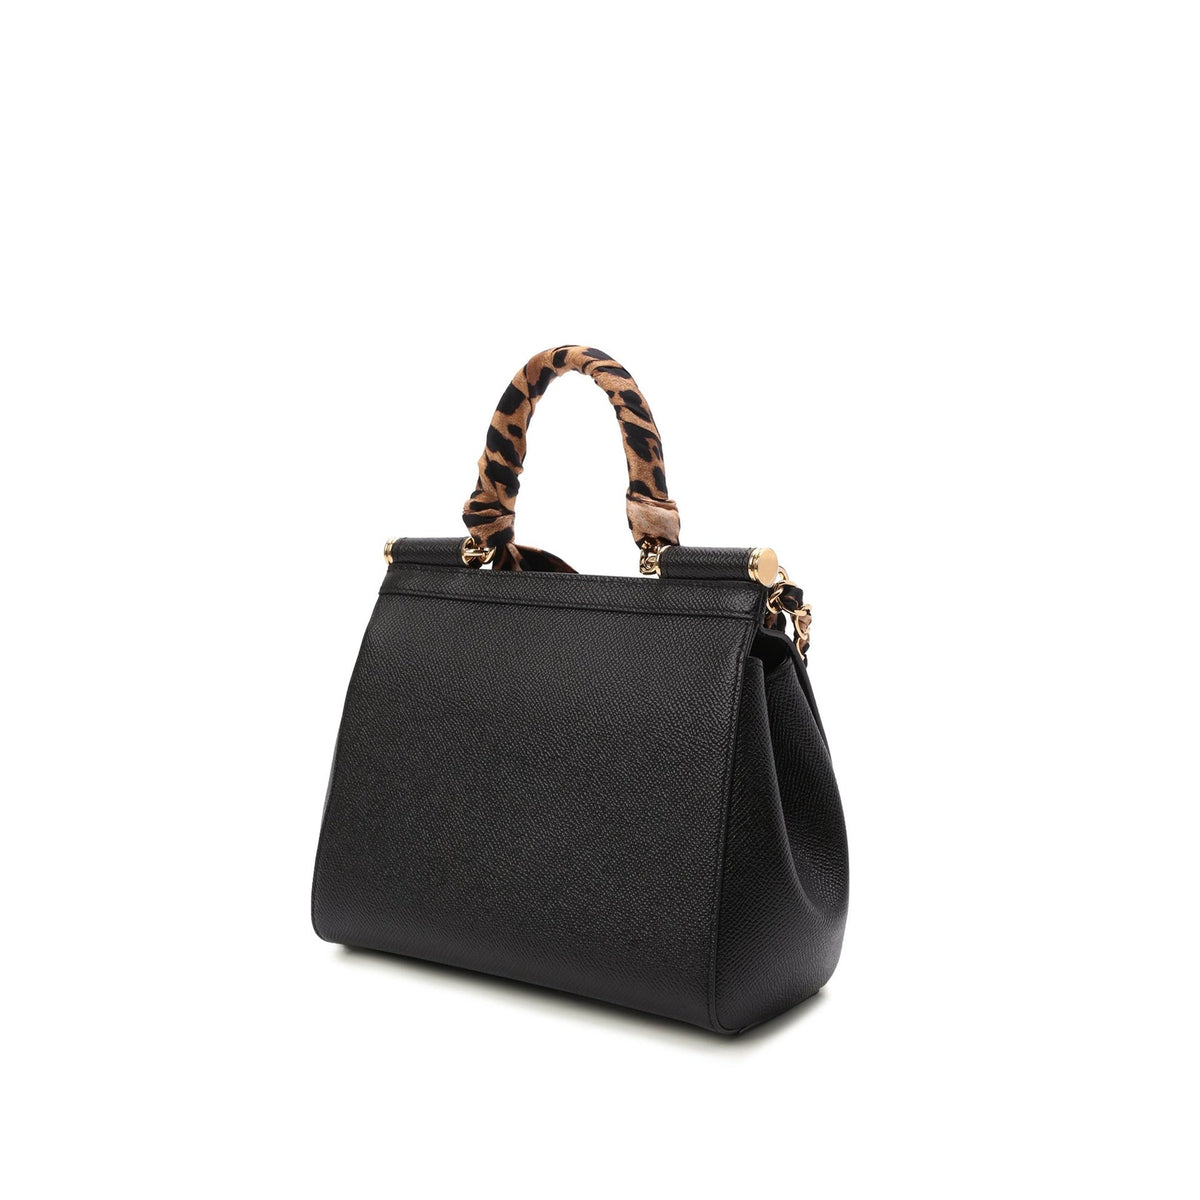 Dolce&Gabbana Sicily Small - Handbag for Woman - Black